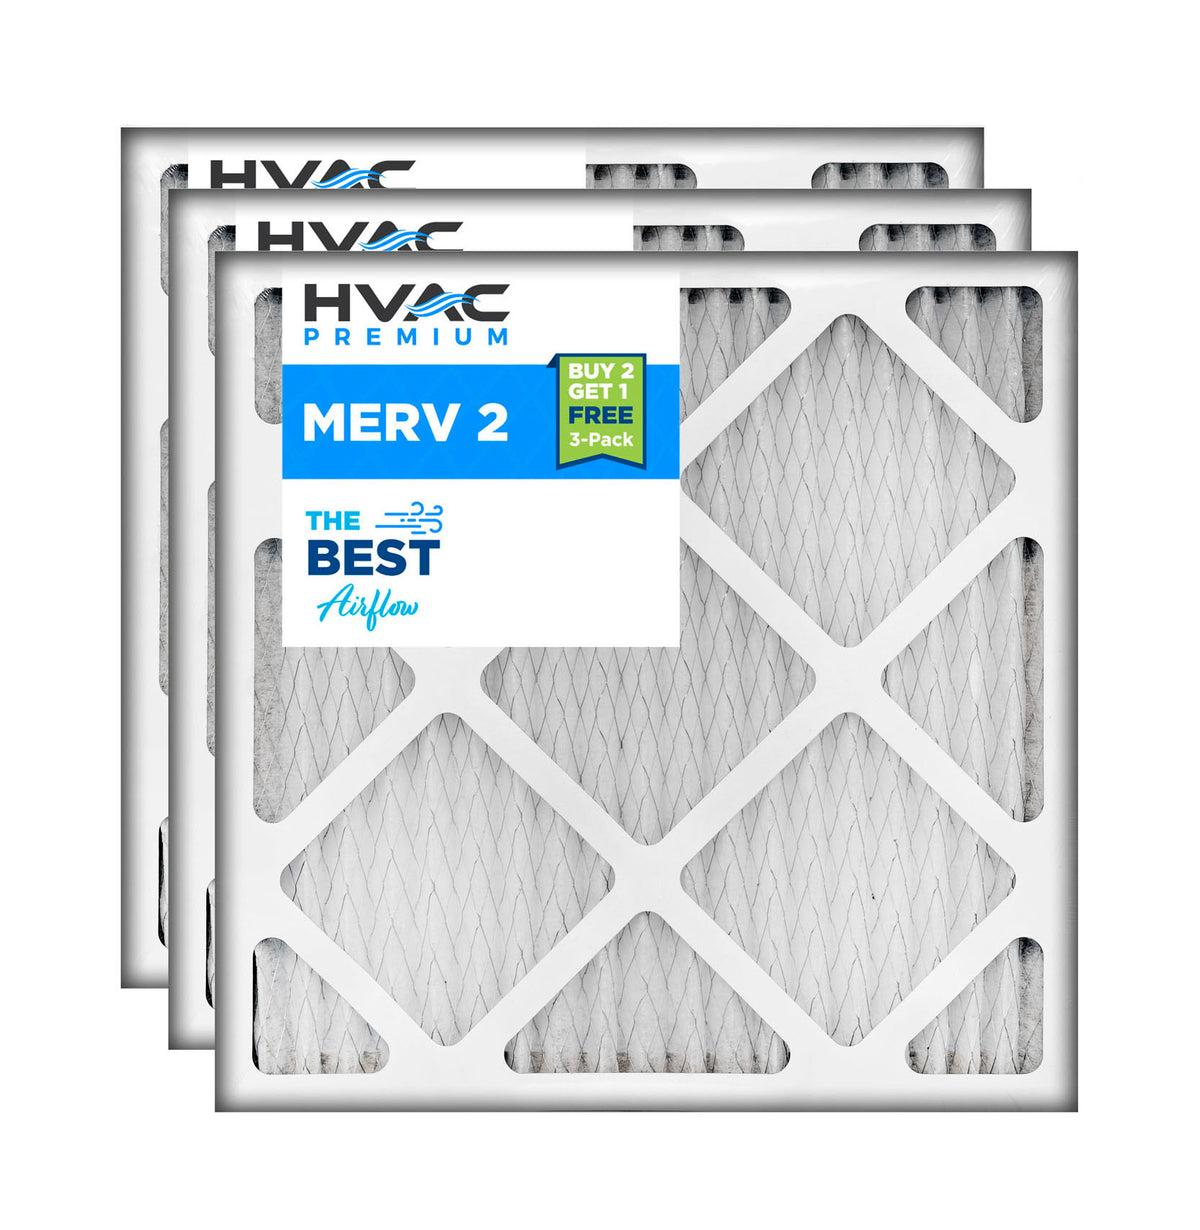 25 x 20 Merv 2 HVAC Pleated Filter, 3-Pack